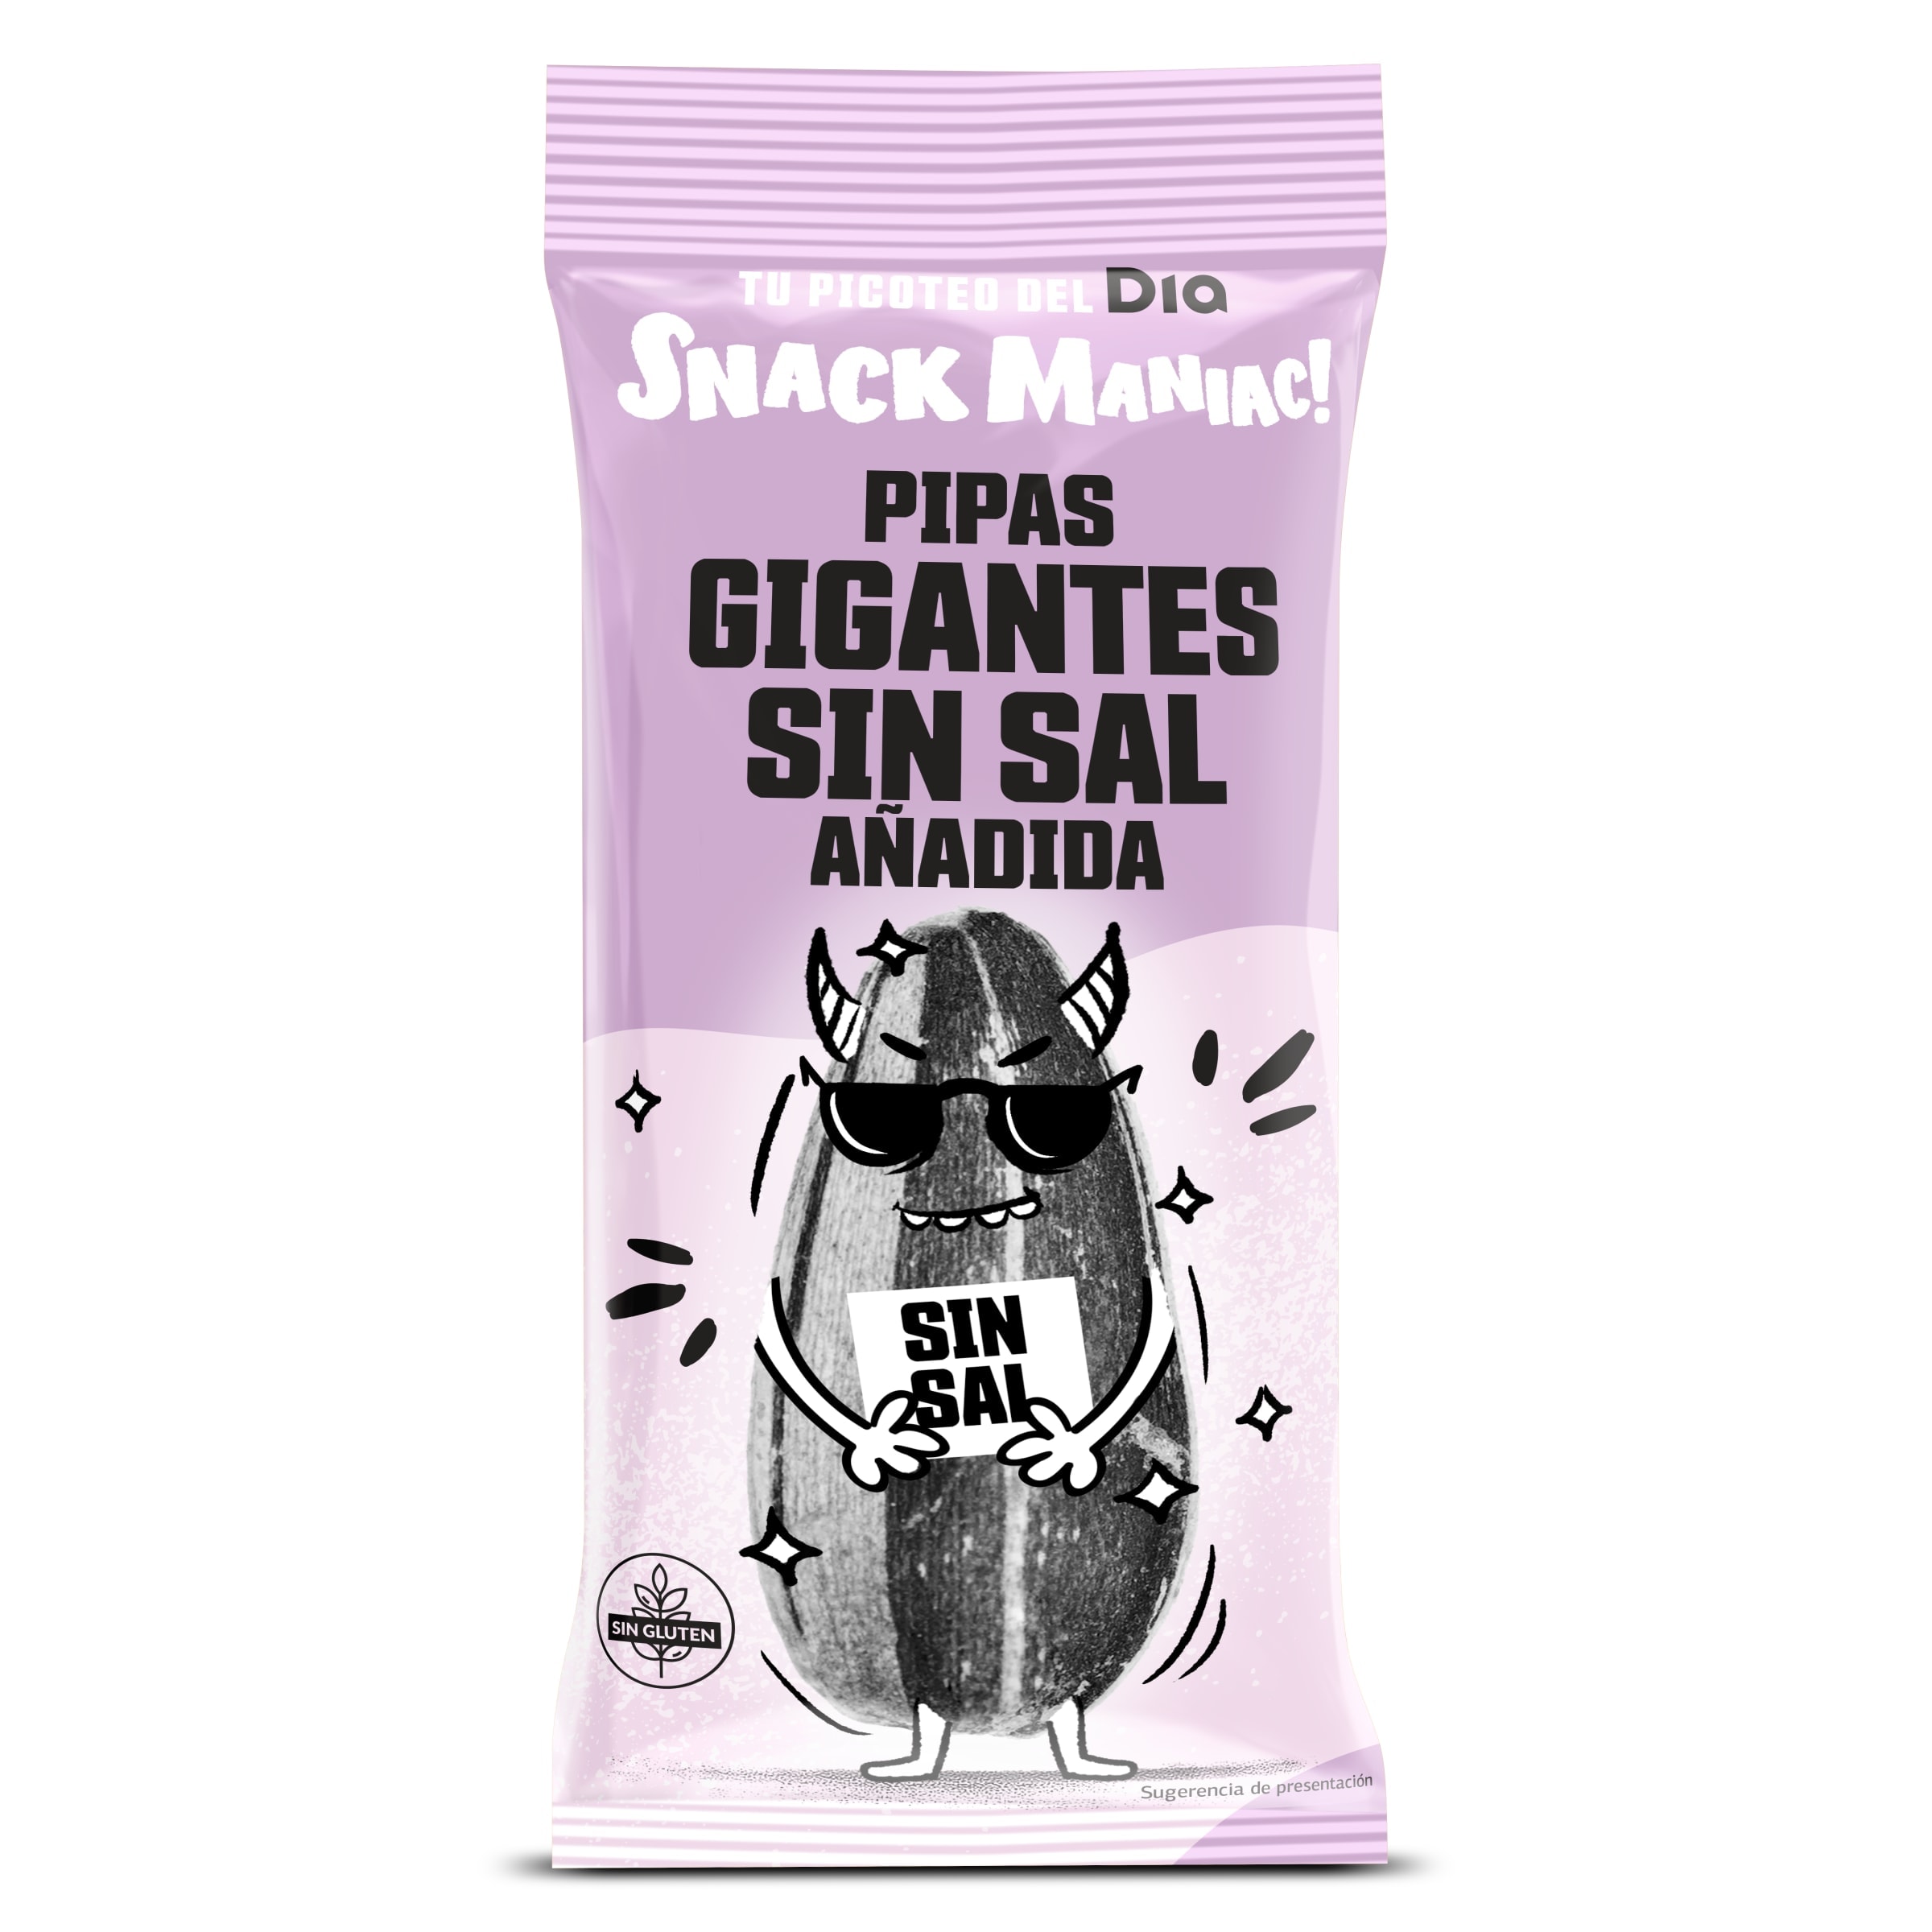 Pipas gigantes sin sal Snack Maniac bolsa 125 g - Supermercados DIA